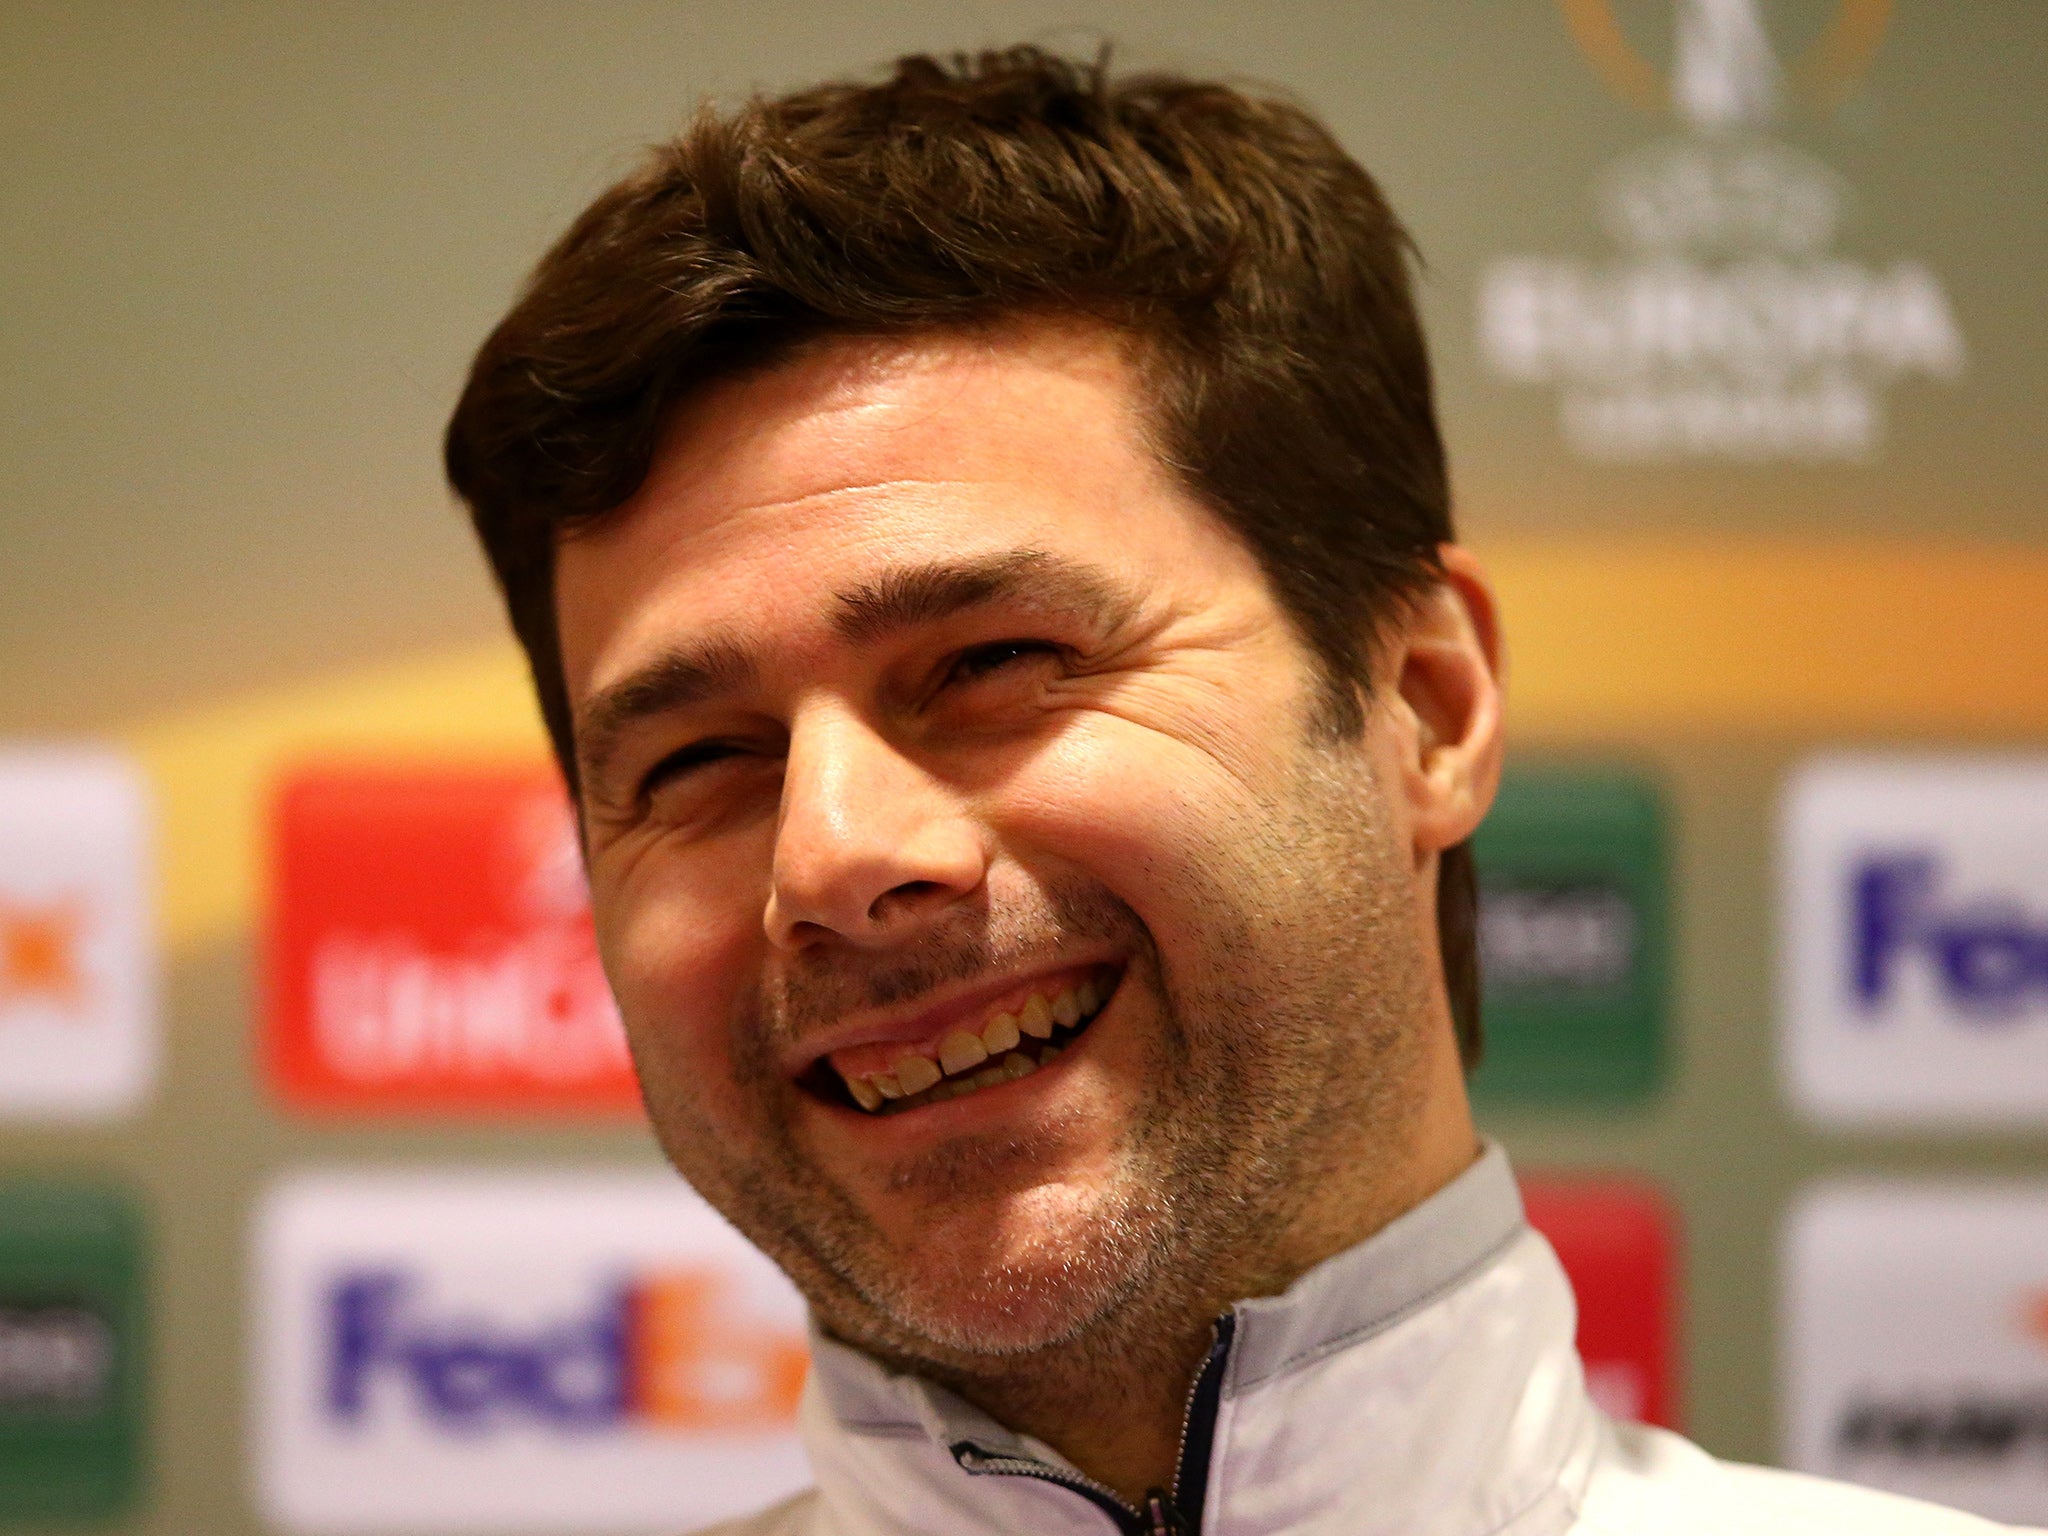 Tottenham Hotspur manager Mauricio Pochettino